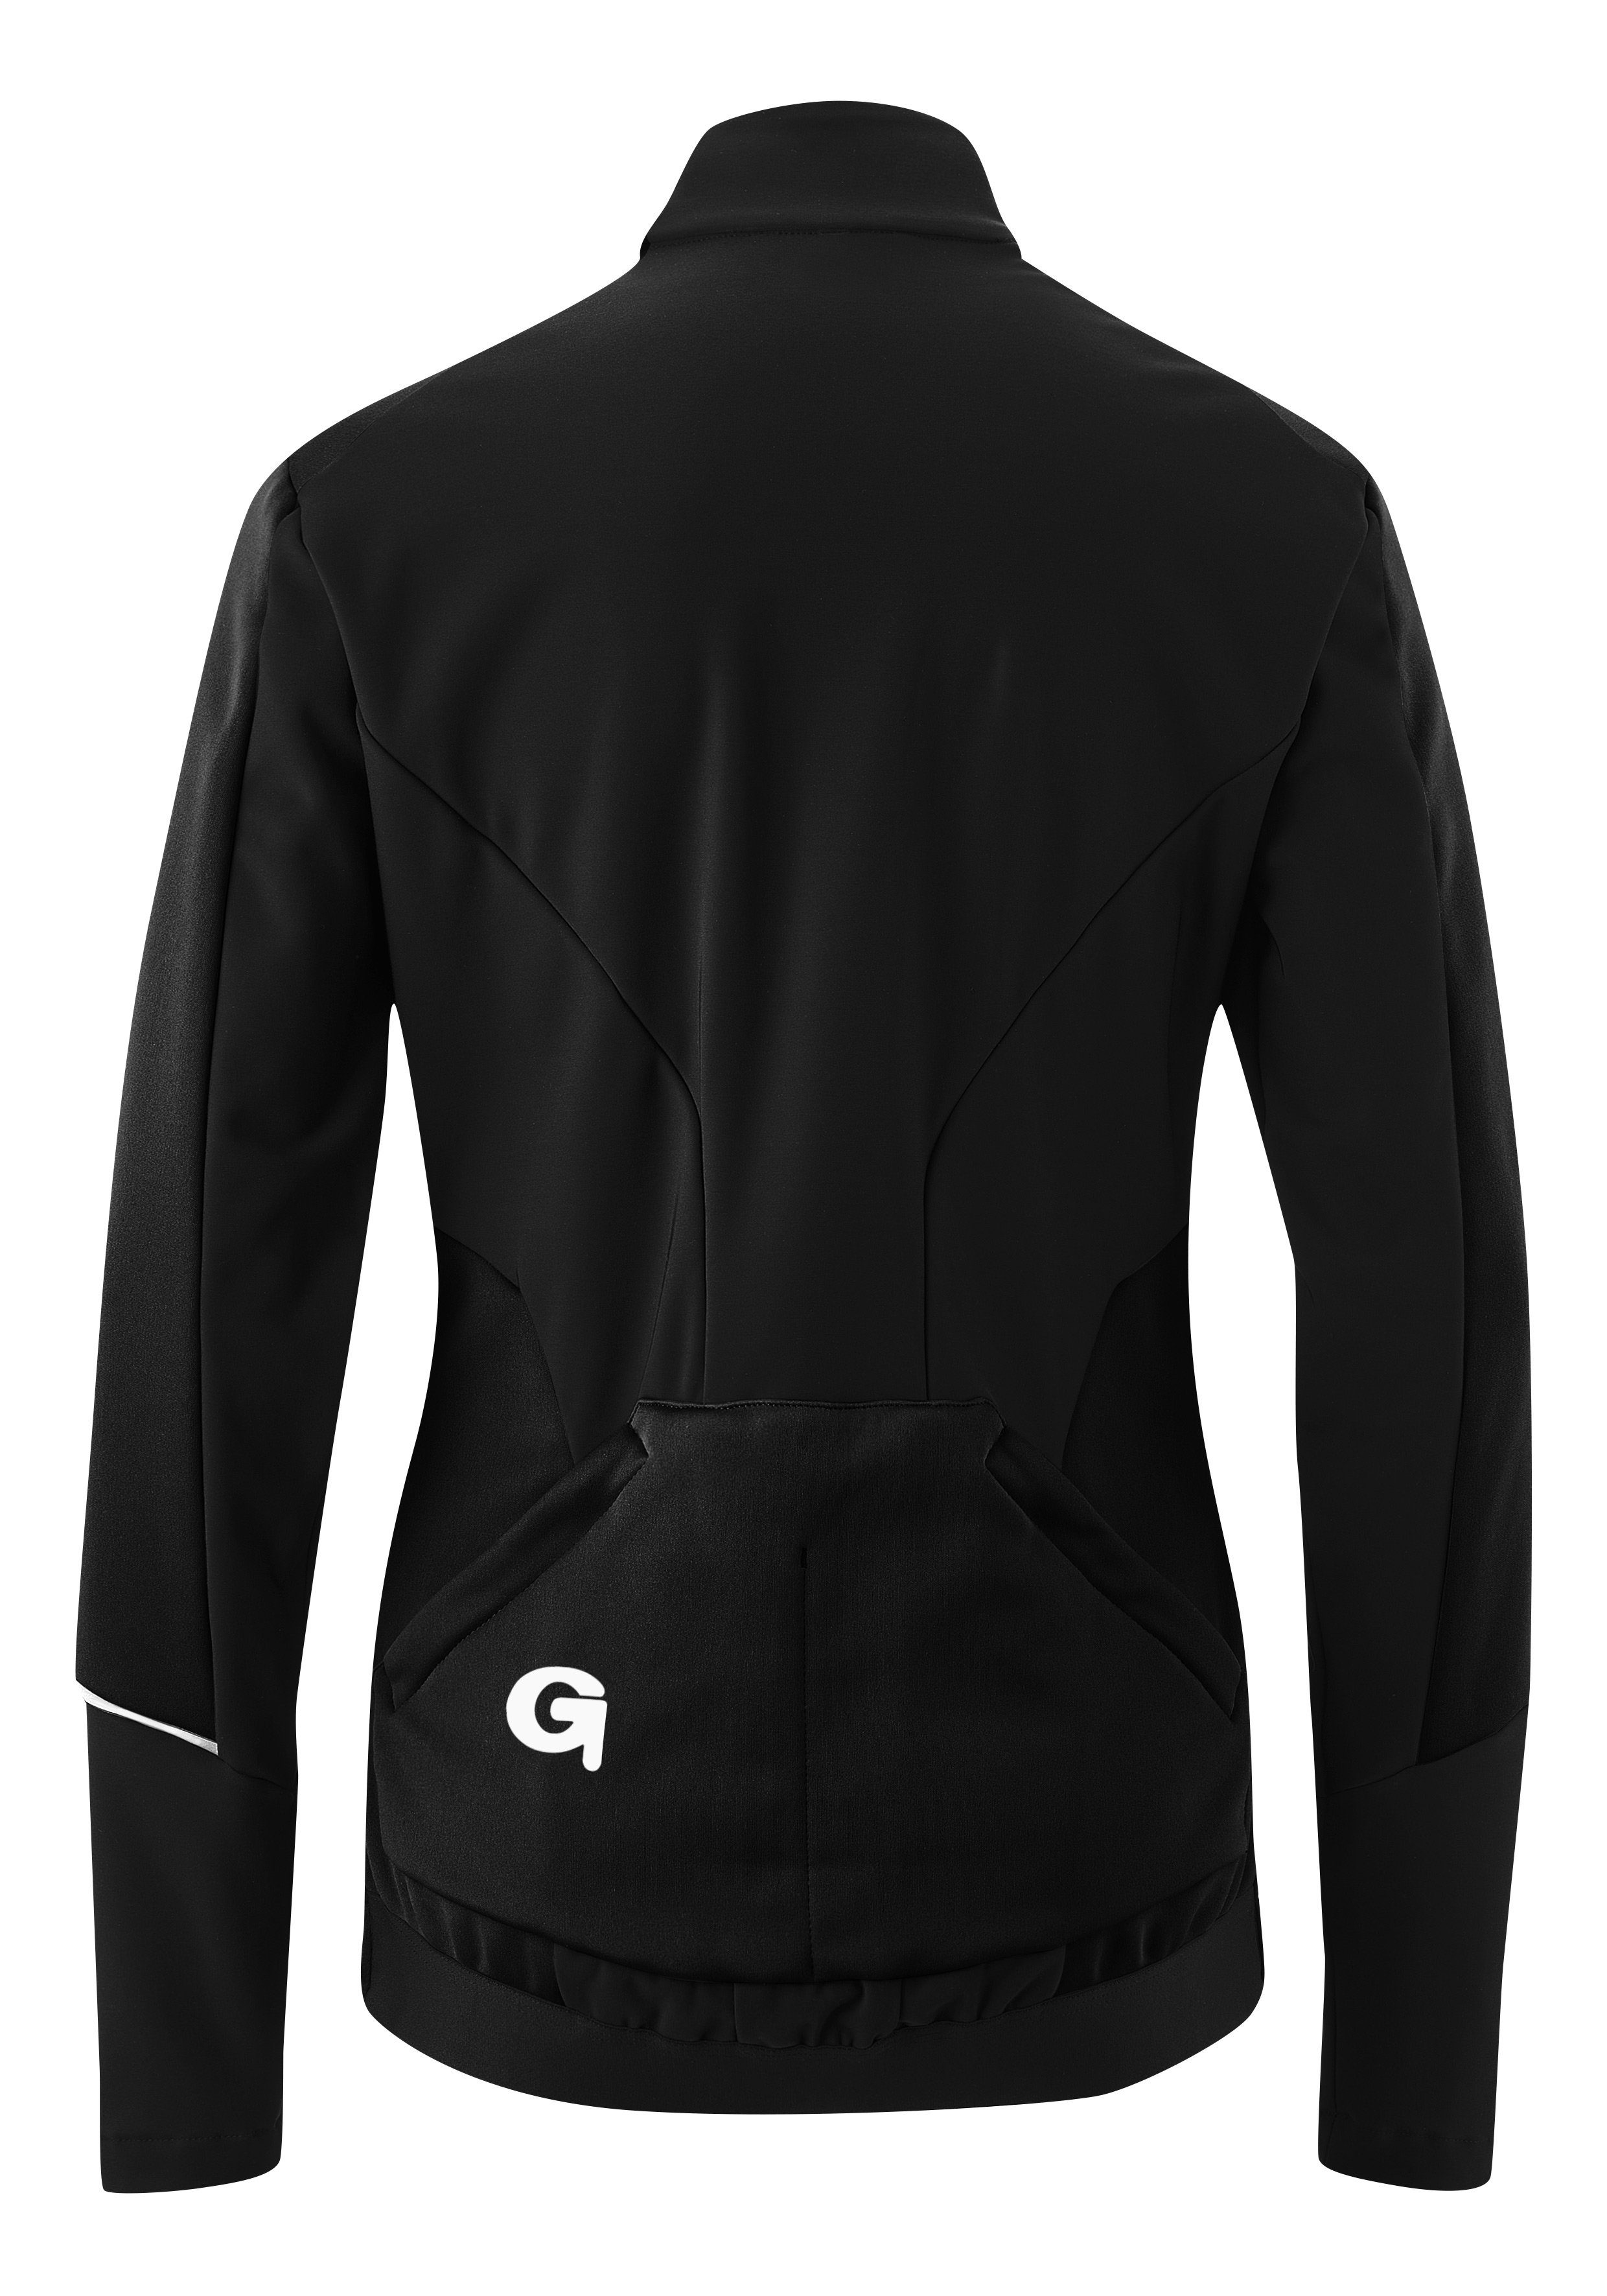 Windjacke Softshell-Jacke, wasserabweisend Fahrradjacke schwarz Damen FURIANI atmungsaktiv Gonso und